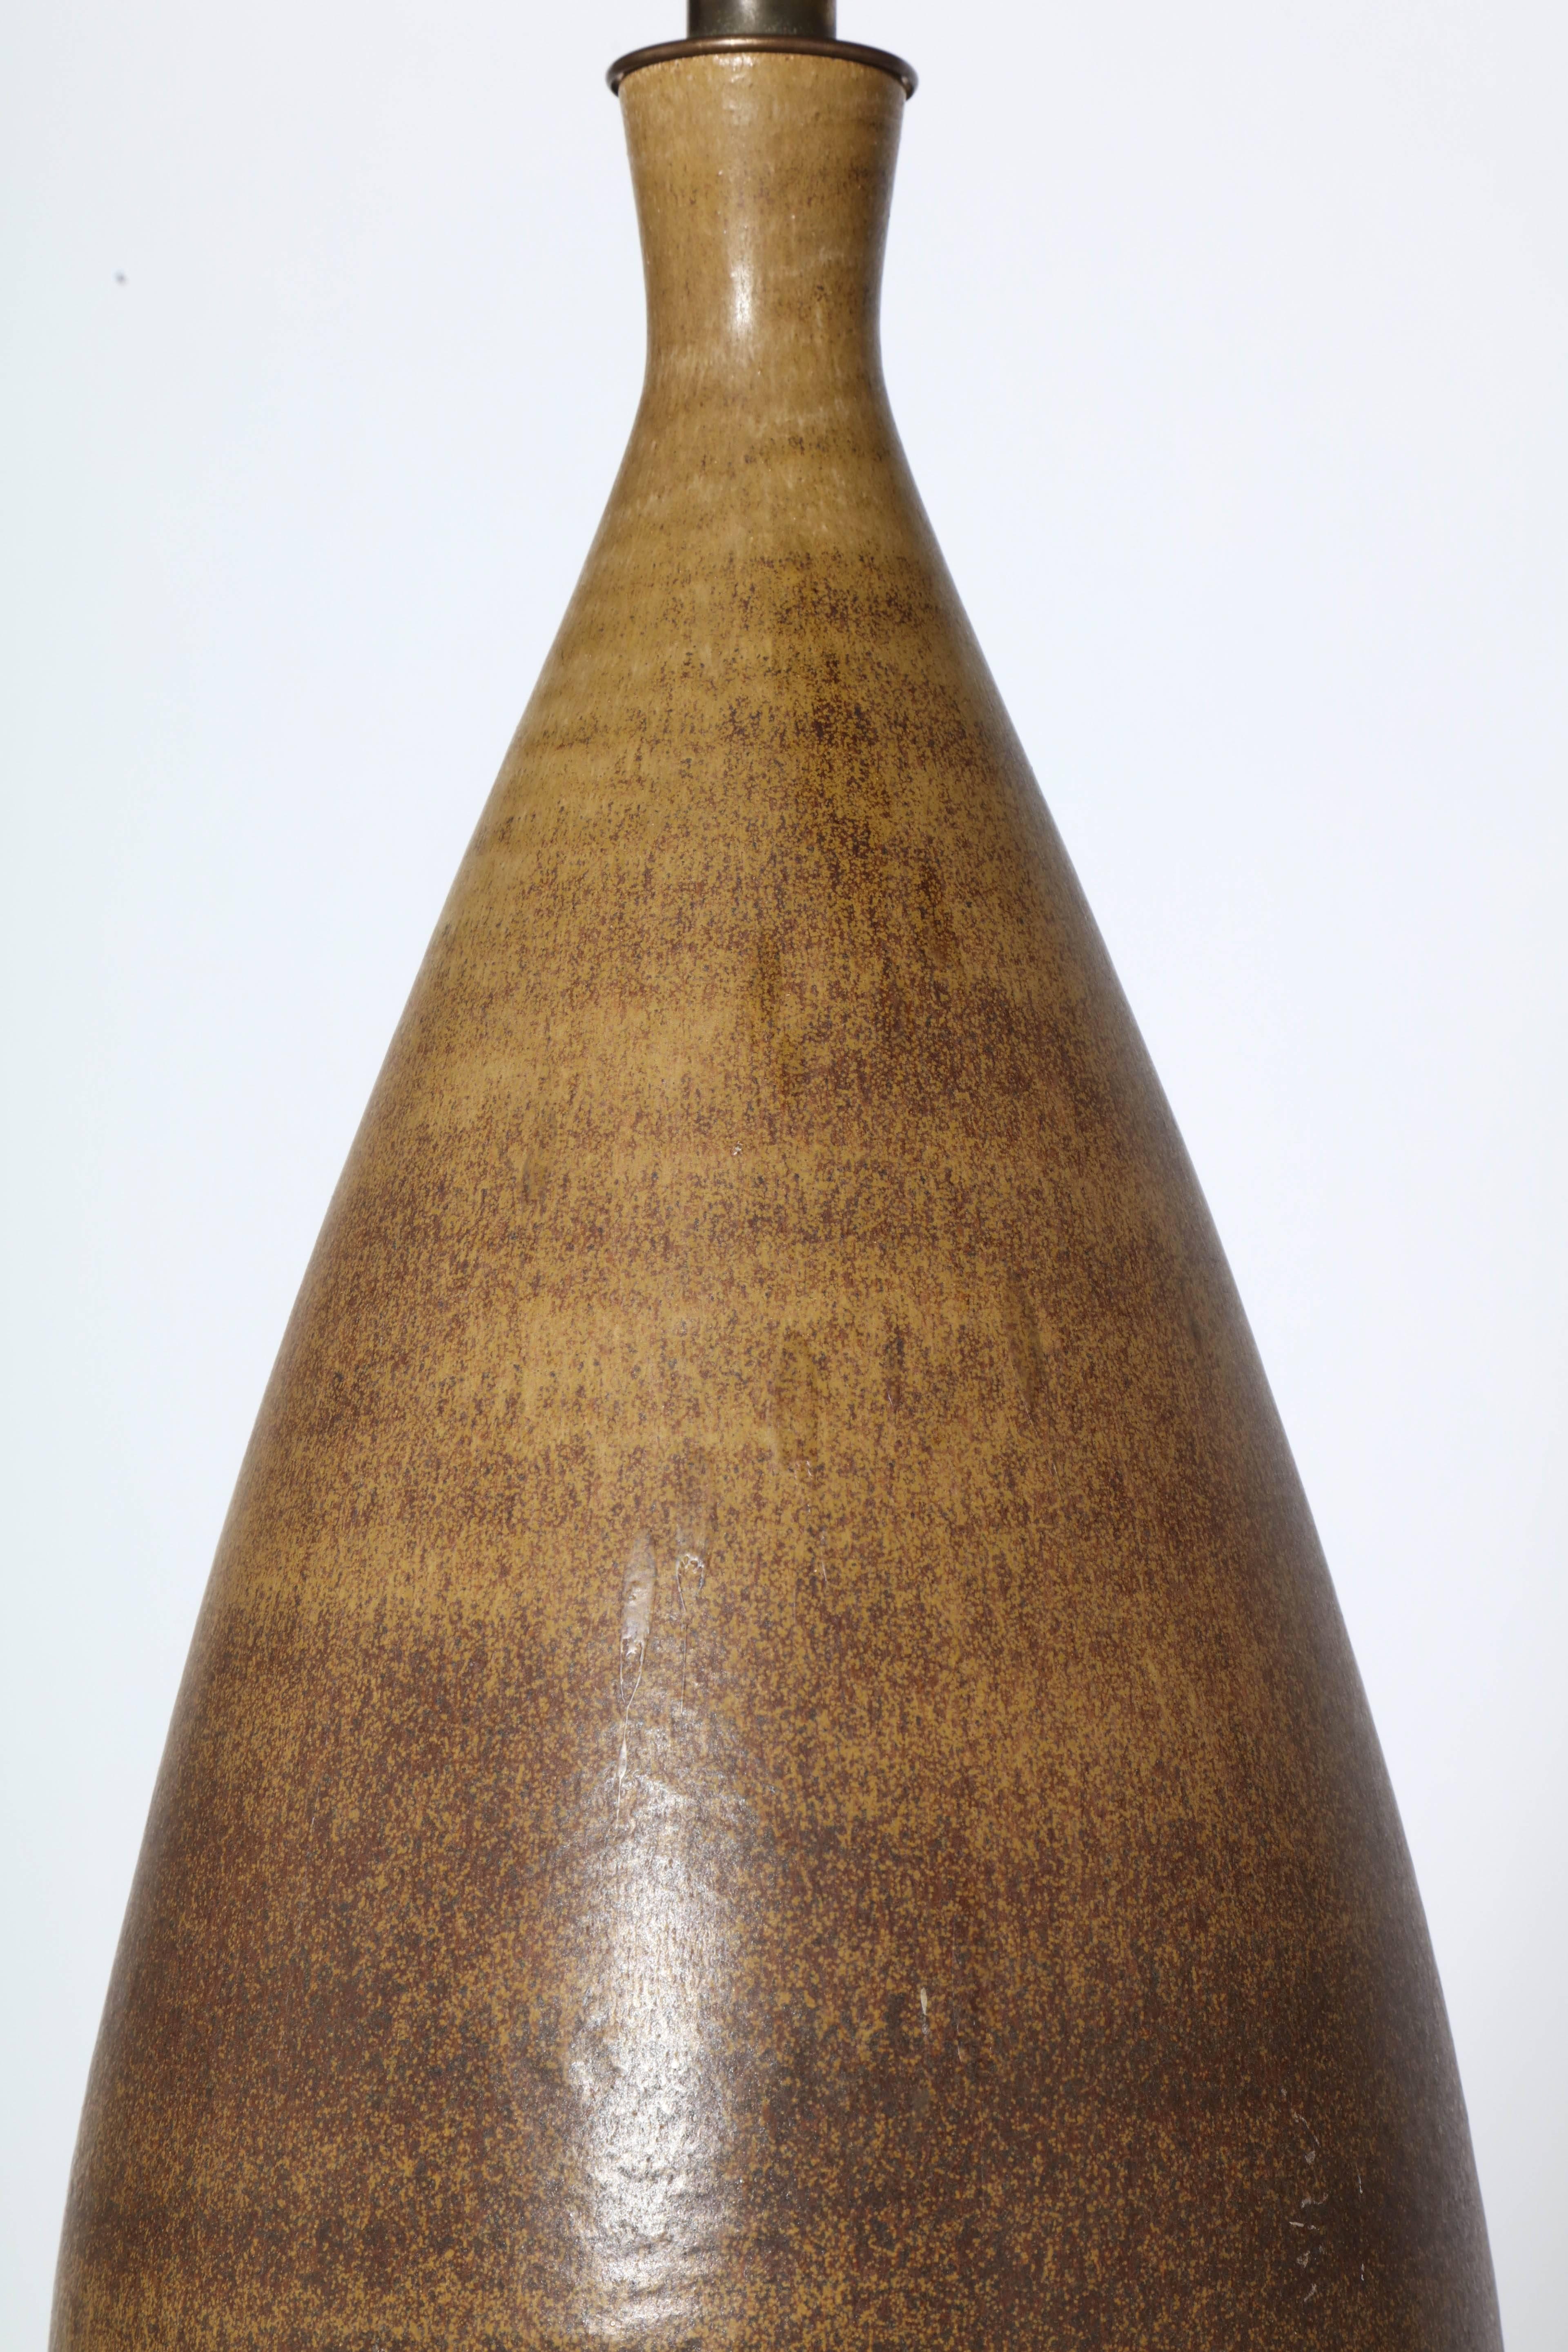 American Substantial Lee Rosen for Design-Technics Series 3300 Pottery Table Lamp, 1950's